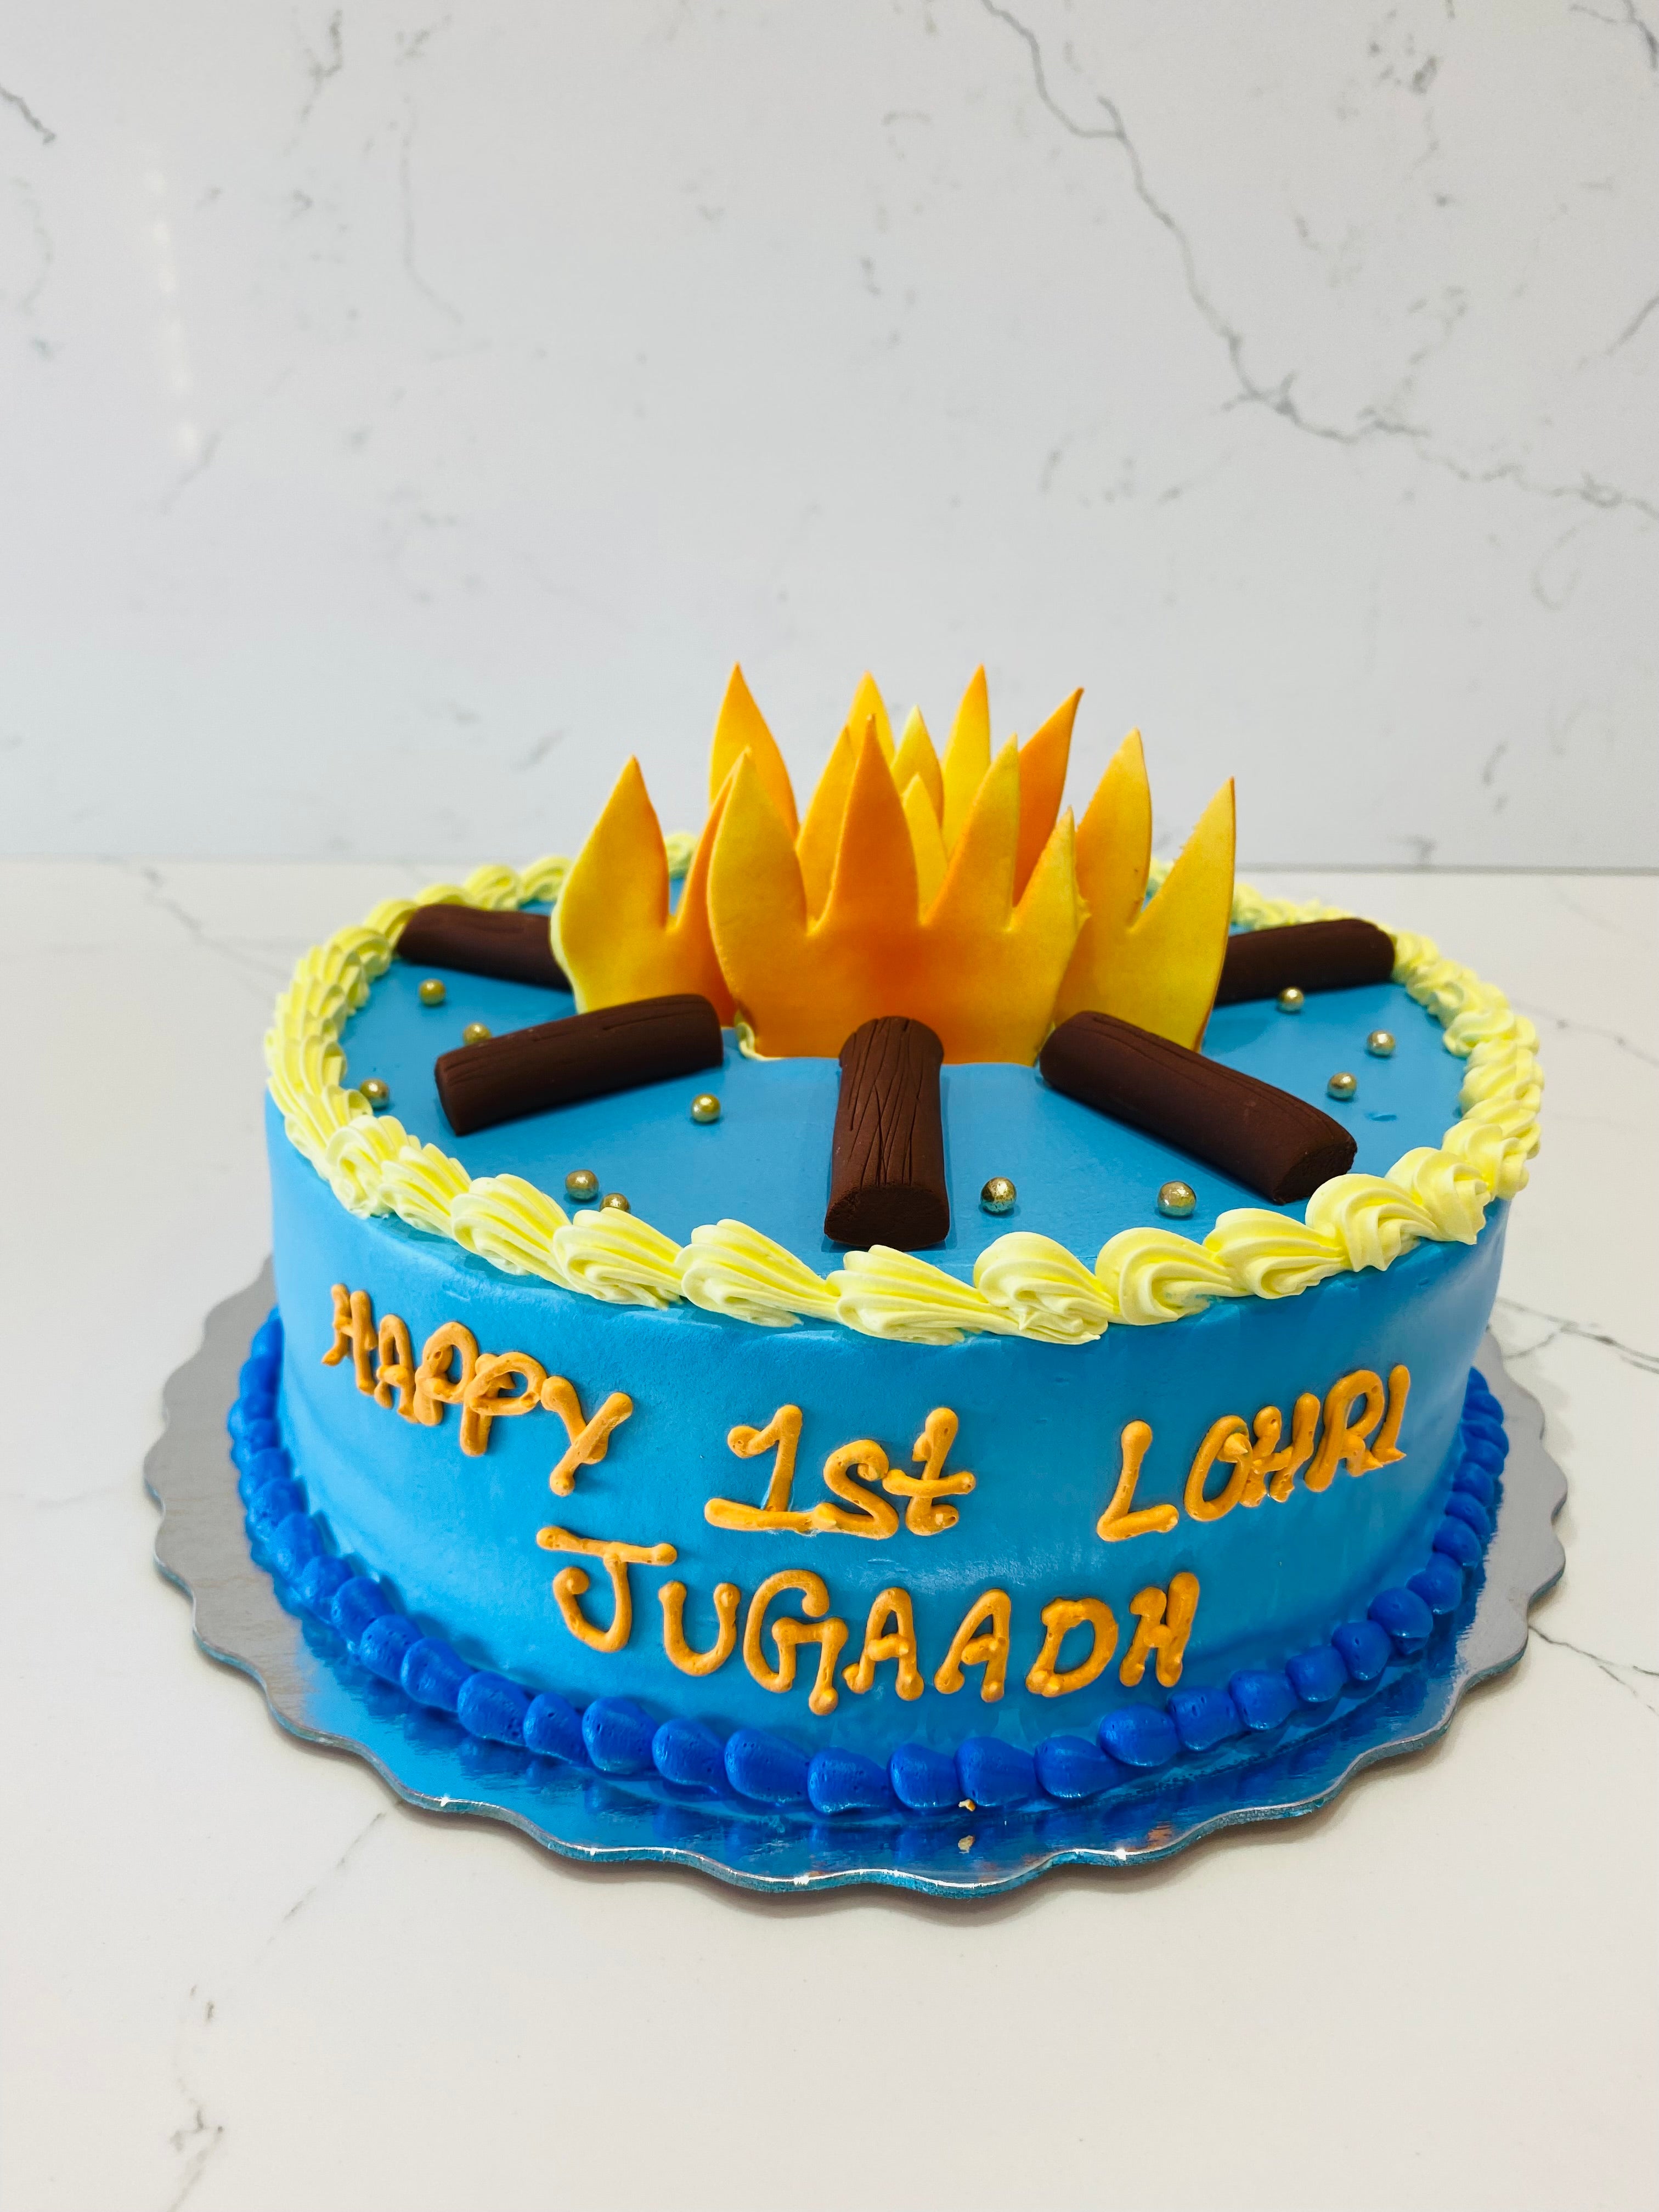 Lohri Cakes - Order Online with FlavoursGuru